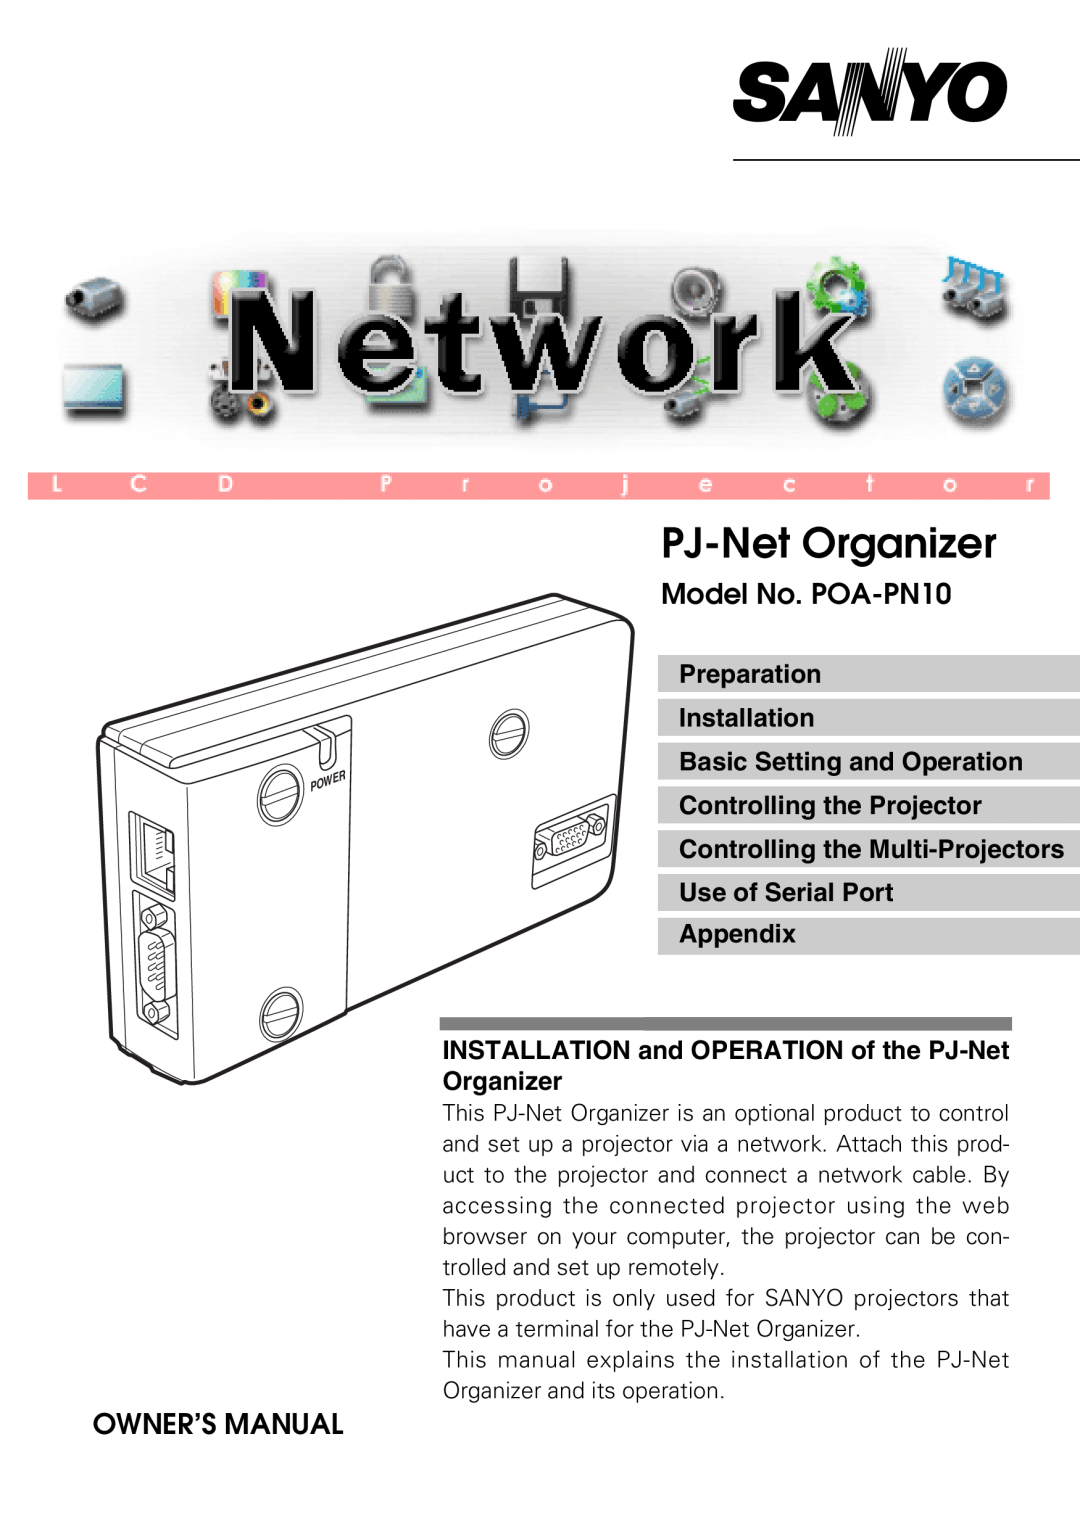 Sanyo owner manual PJ-Net Organizer, Model No. POA-PN10, Owner’S Manual, Use of Serial Port Appendix 